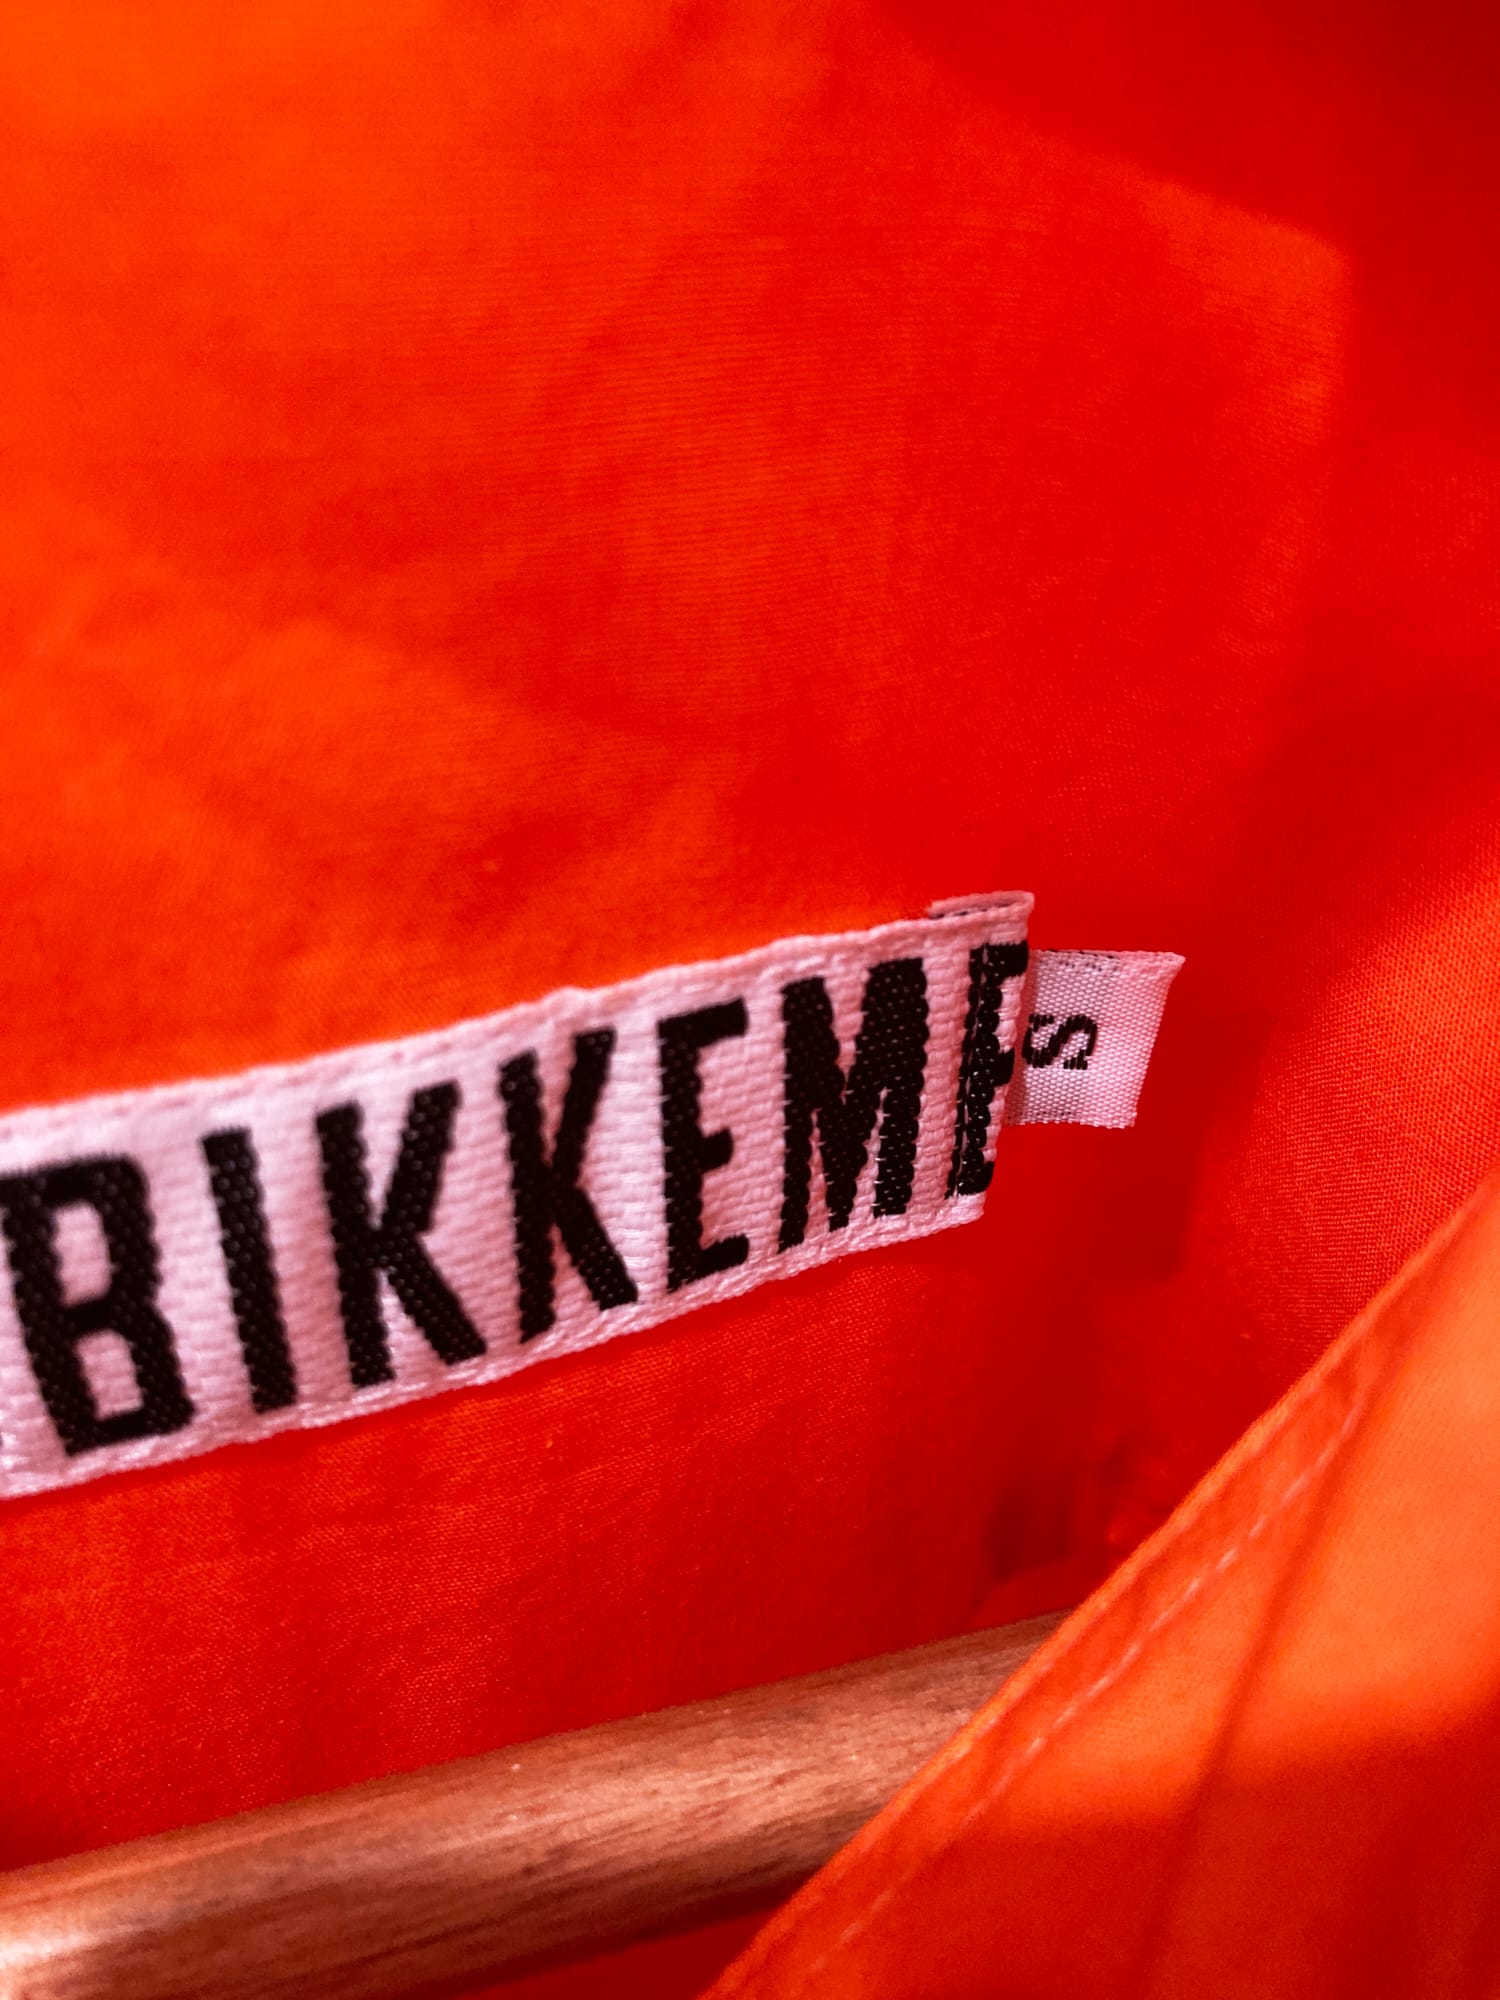 Dirk Bikkembergs 1990s 2000s orange cotton short sleeve shirt - S